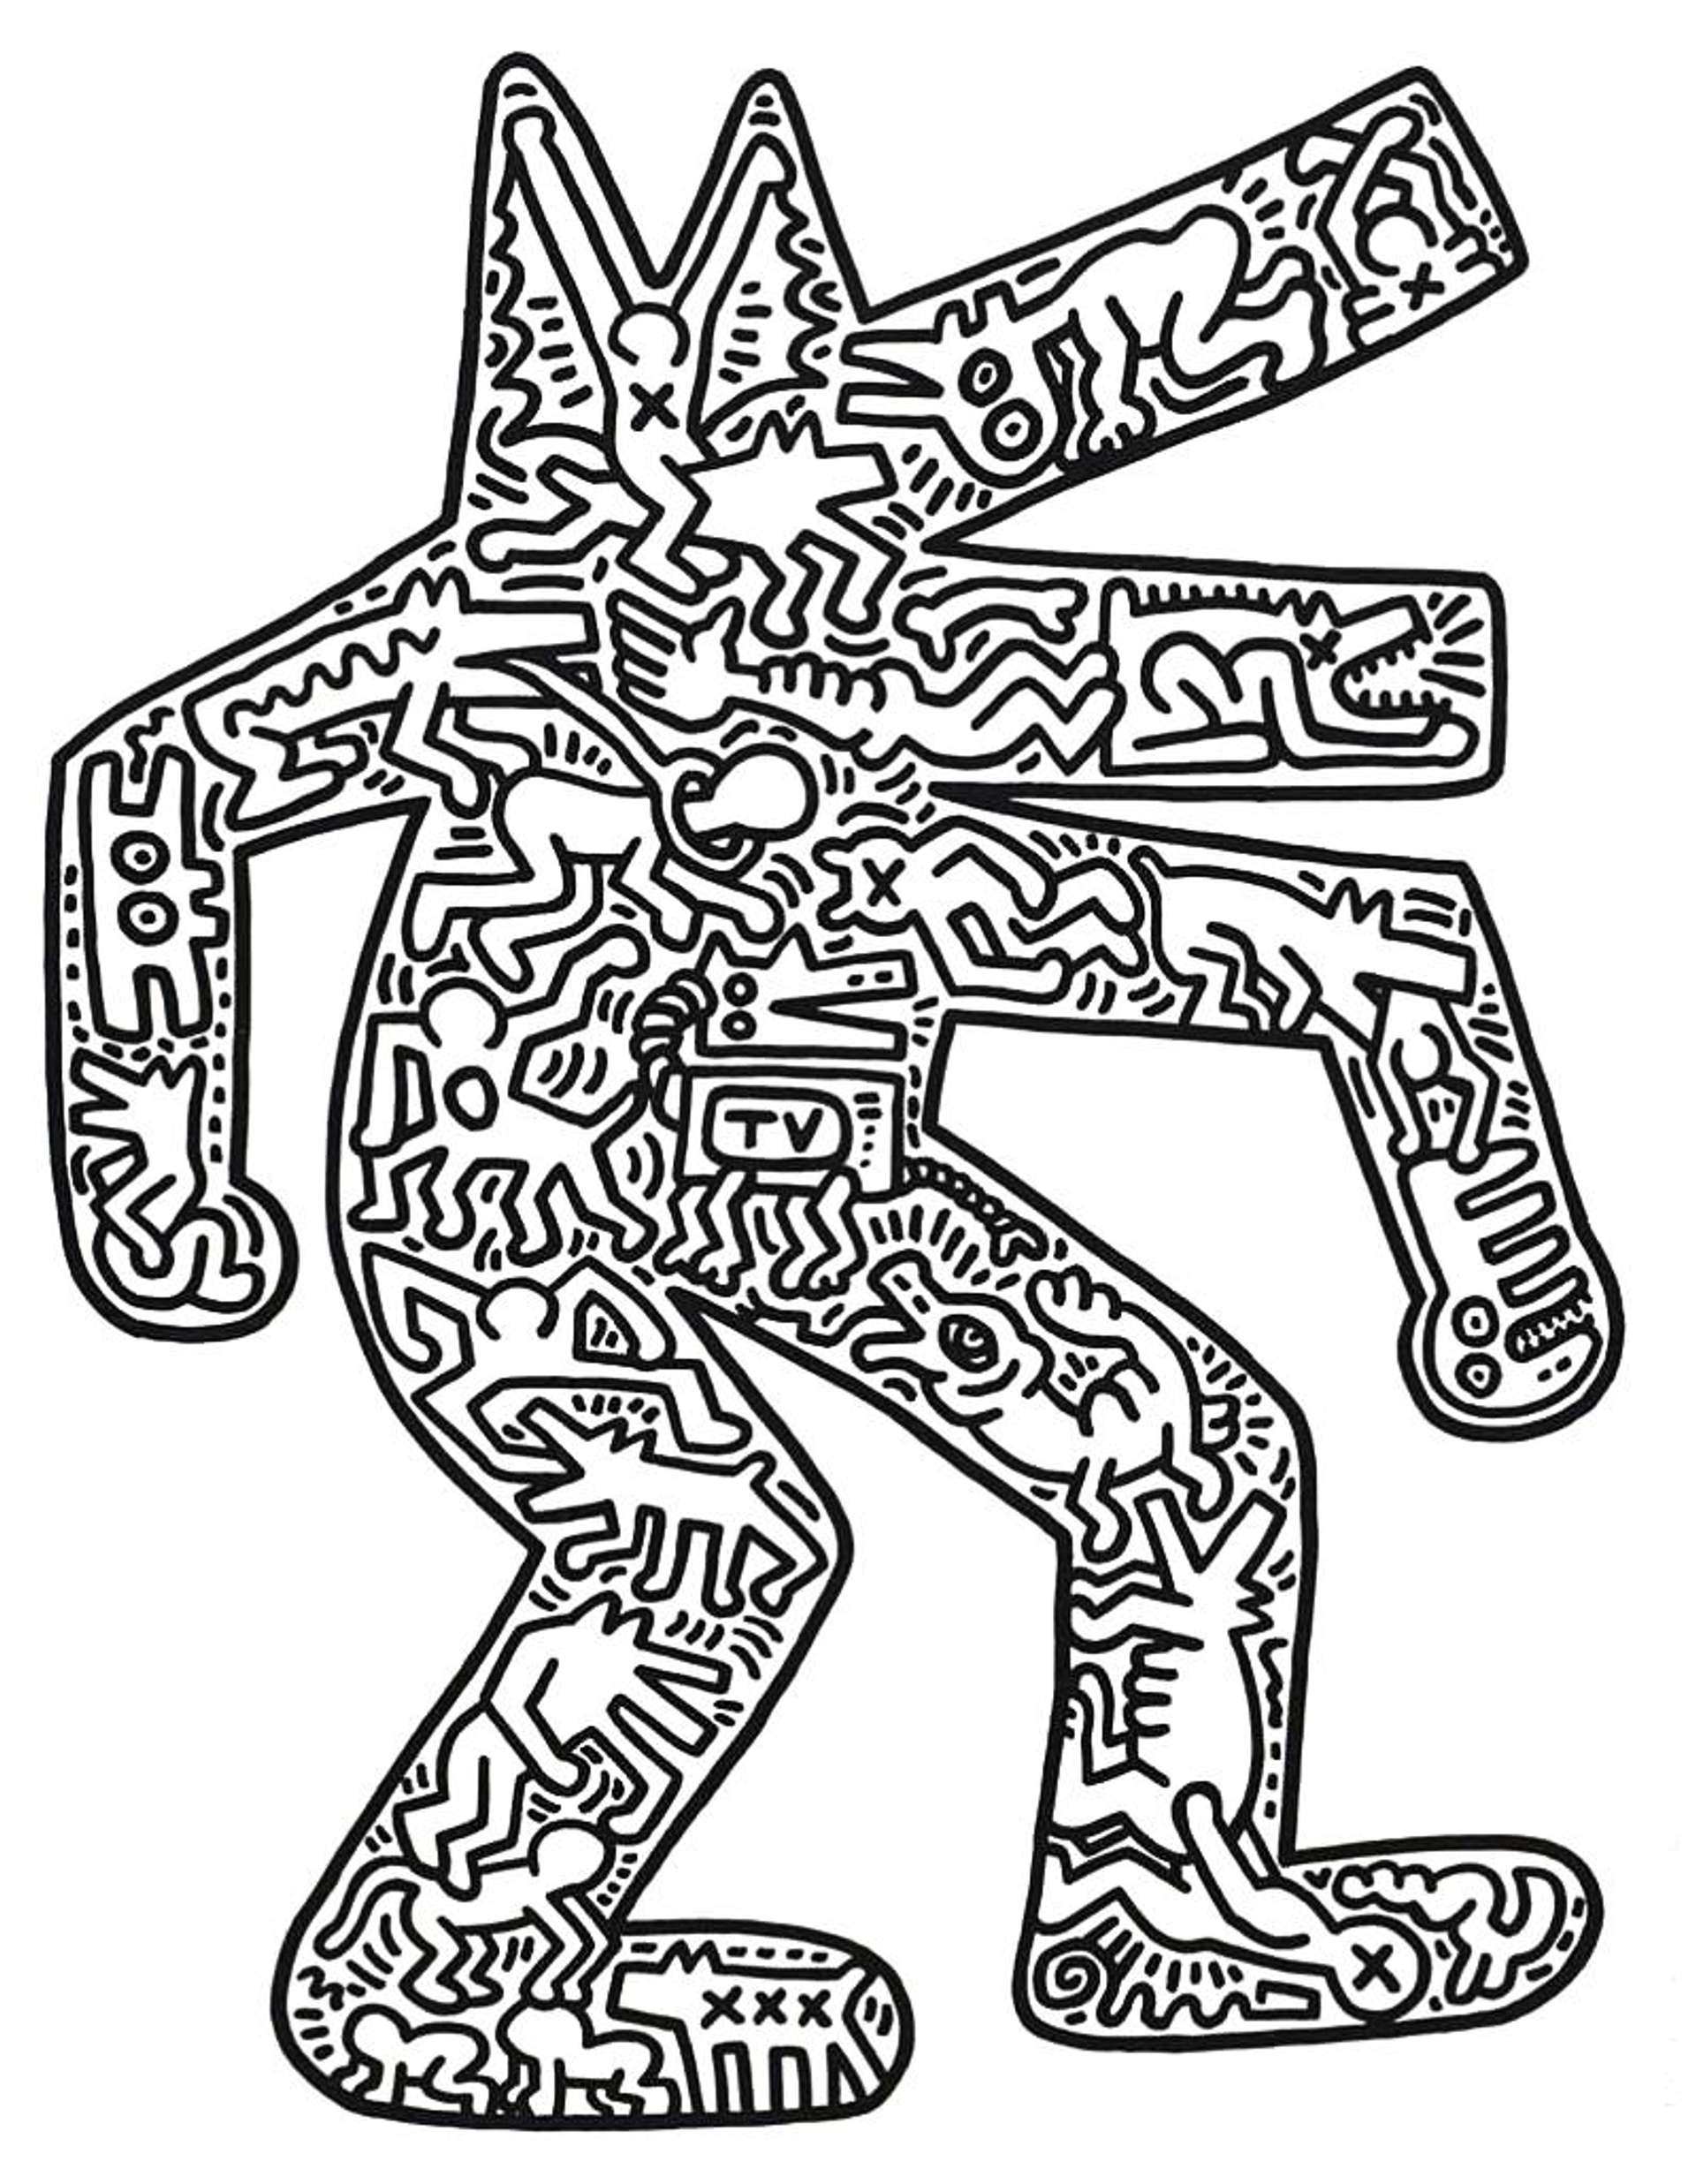 Dog - Signed Print by Keith Haring 1985 - MyArtBroker